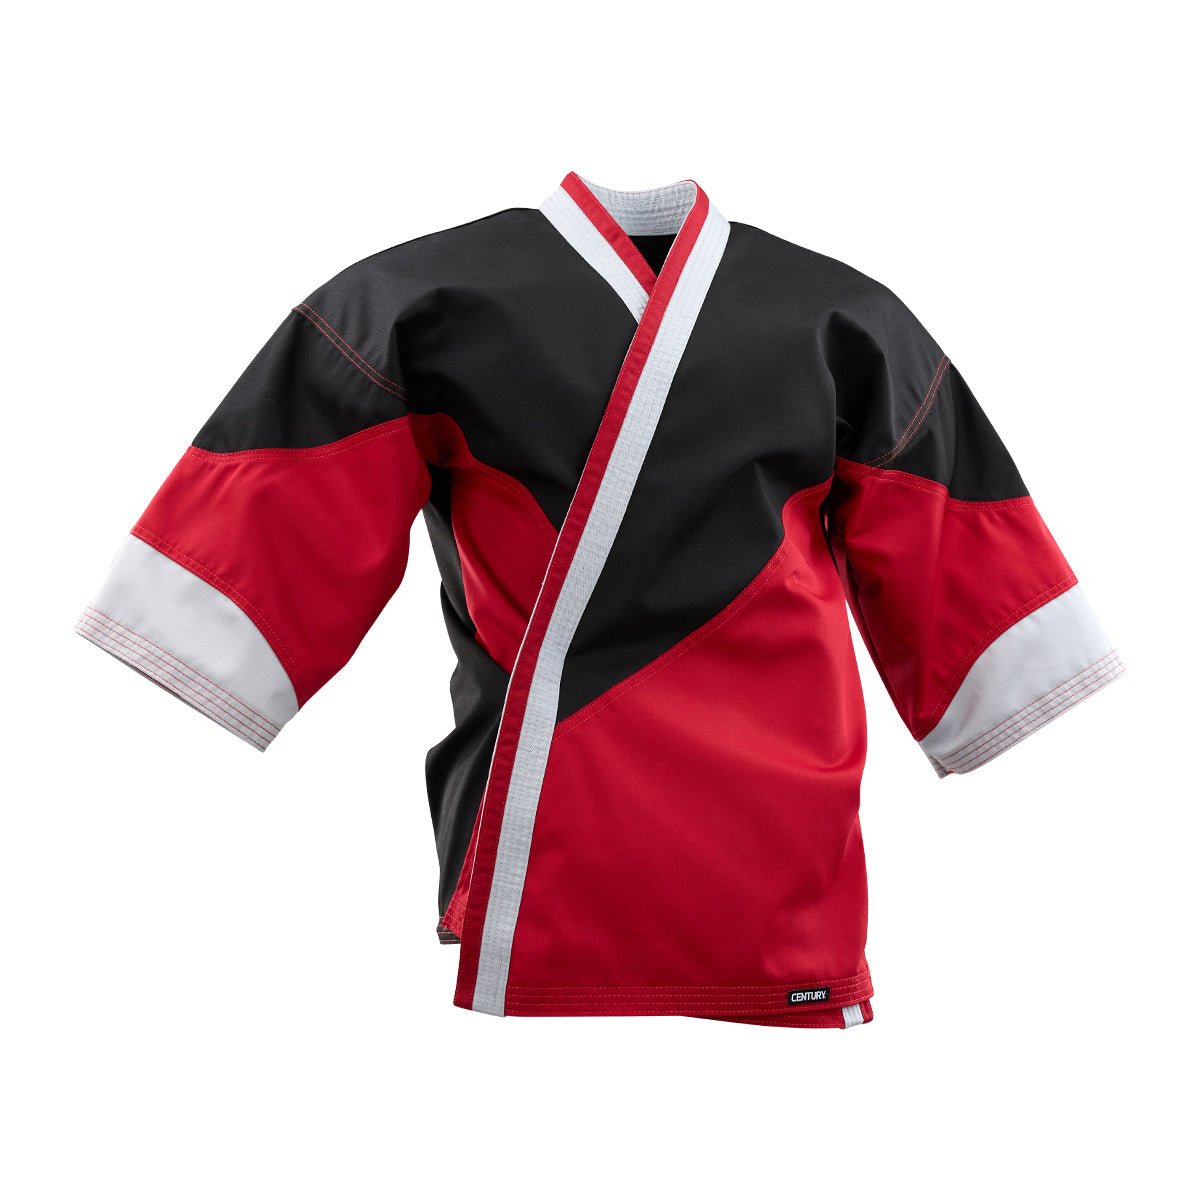 Tri-Color Program Uniform Jacket Black/Grey/Red